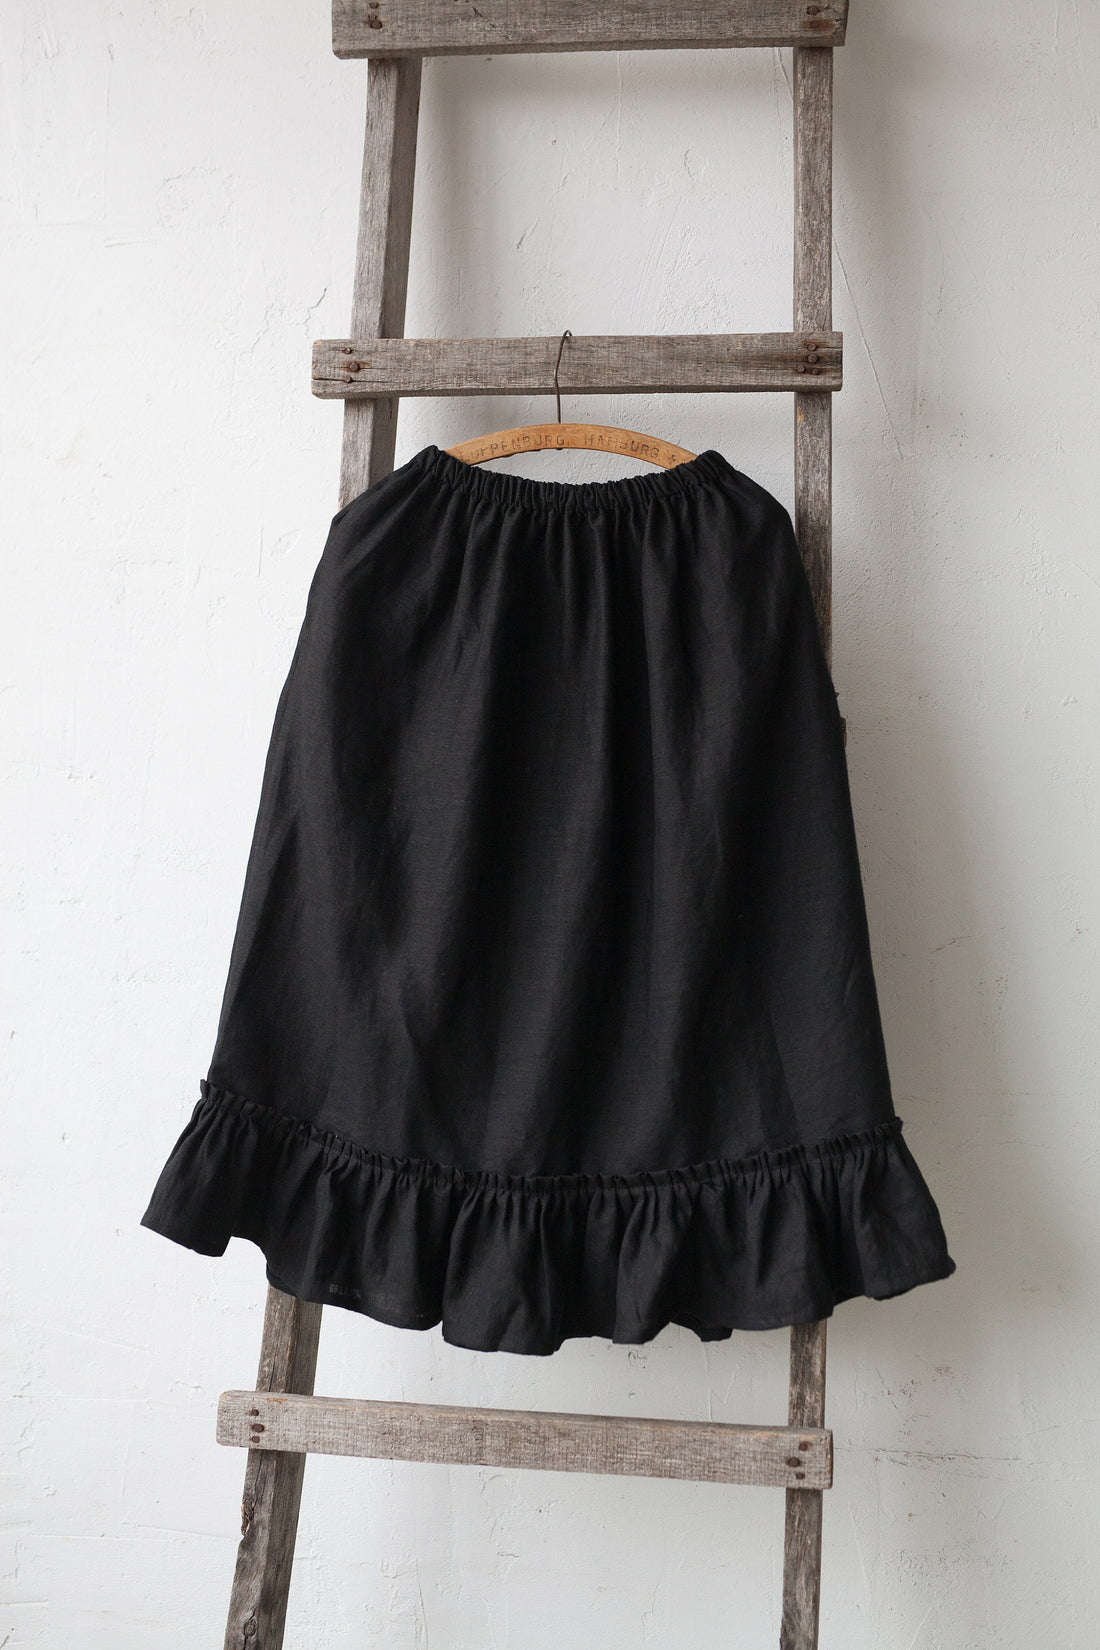 Black Victorian Skirt